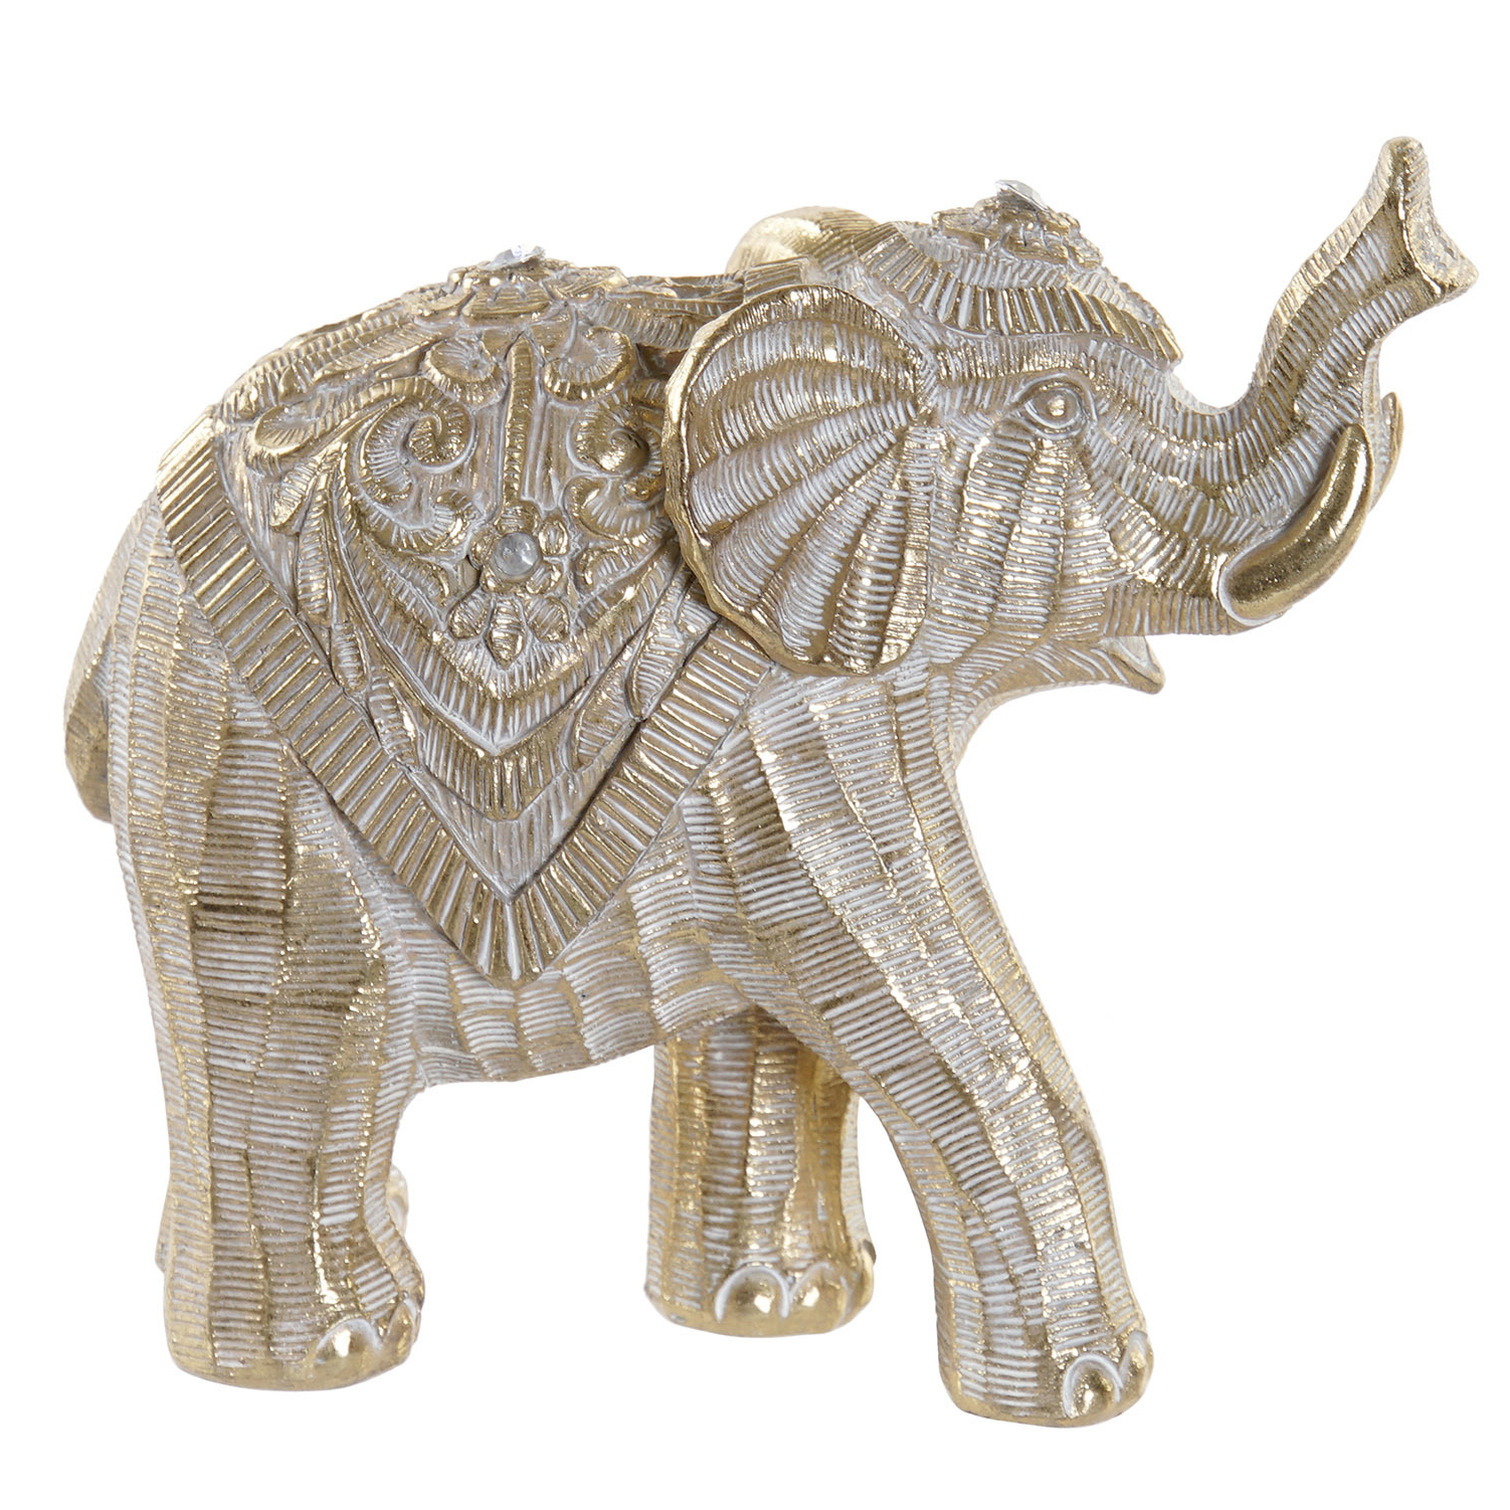 Items Olifant dierenbeeld - goud - polyresin - 17 x 7,5 x 15 cm - home decoratie -